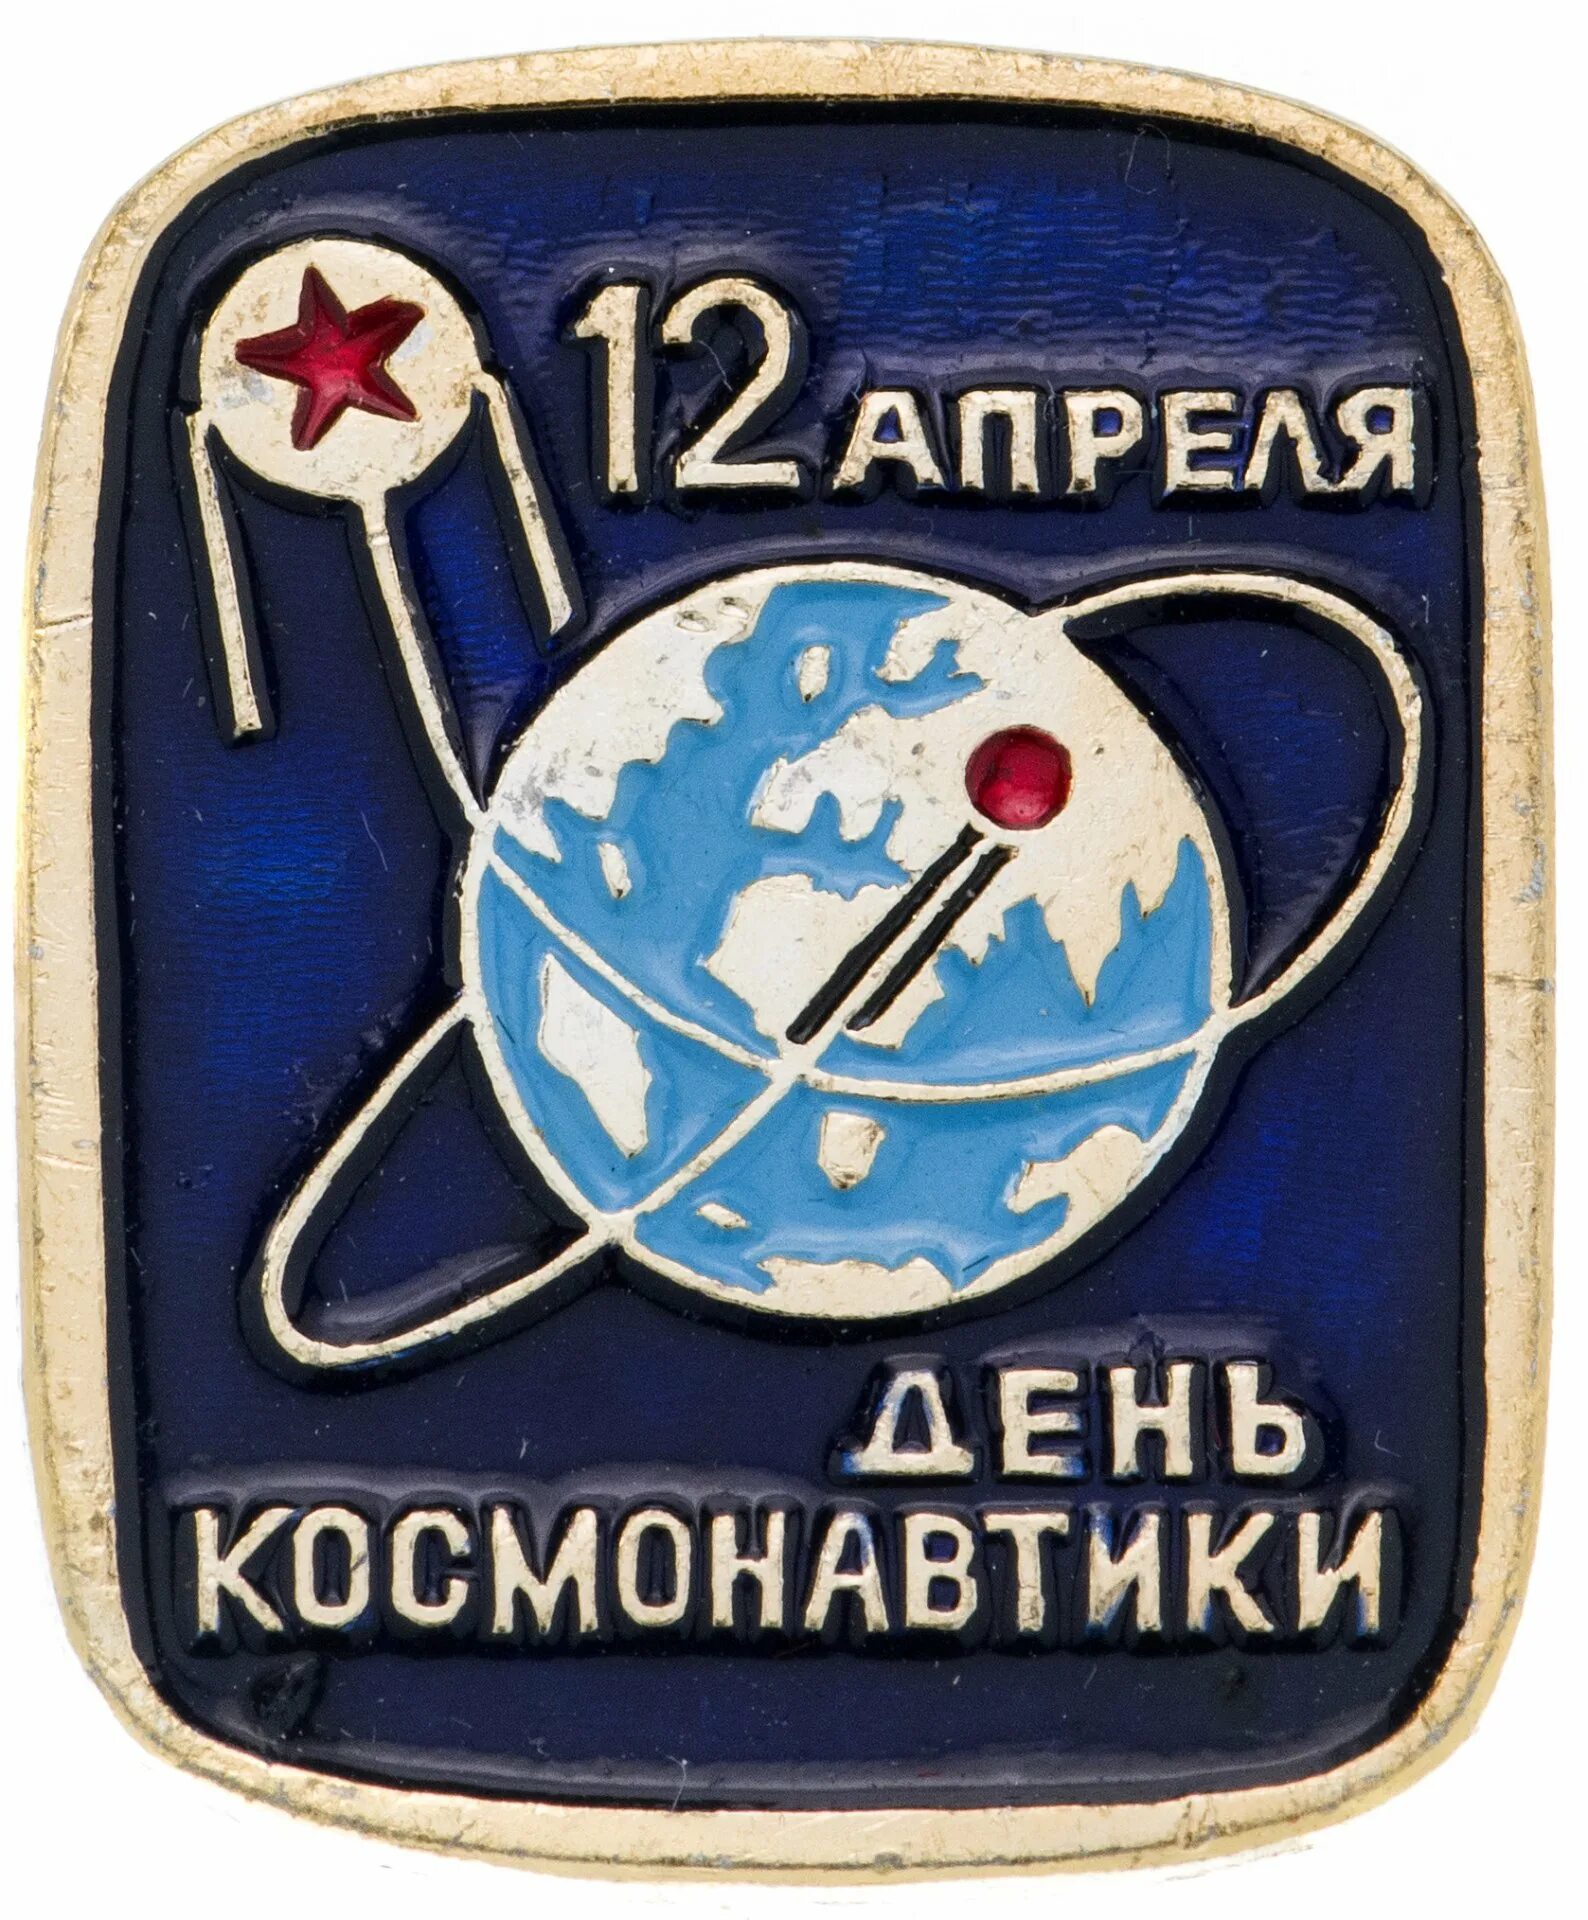 День космонавтики. Значок день космонавтики. Значки ко Дню космонавтики для детей. Значок 12 апреля день космонавтики. День космонавтики логотип